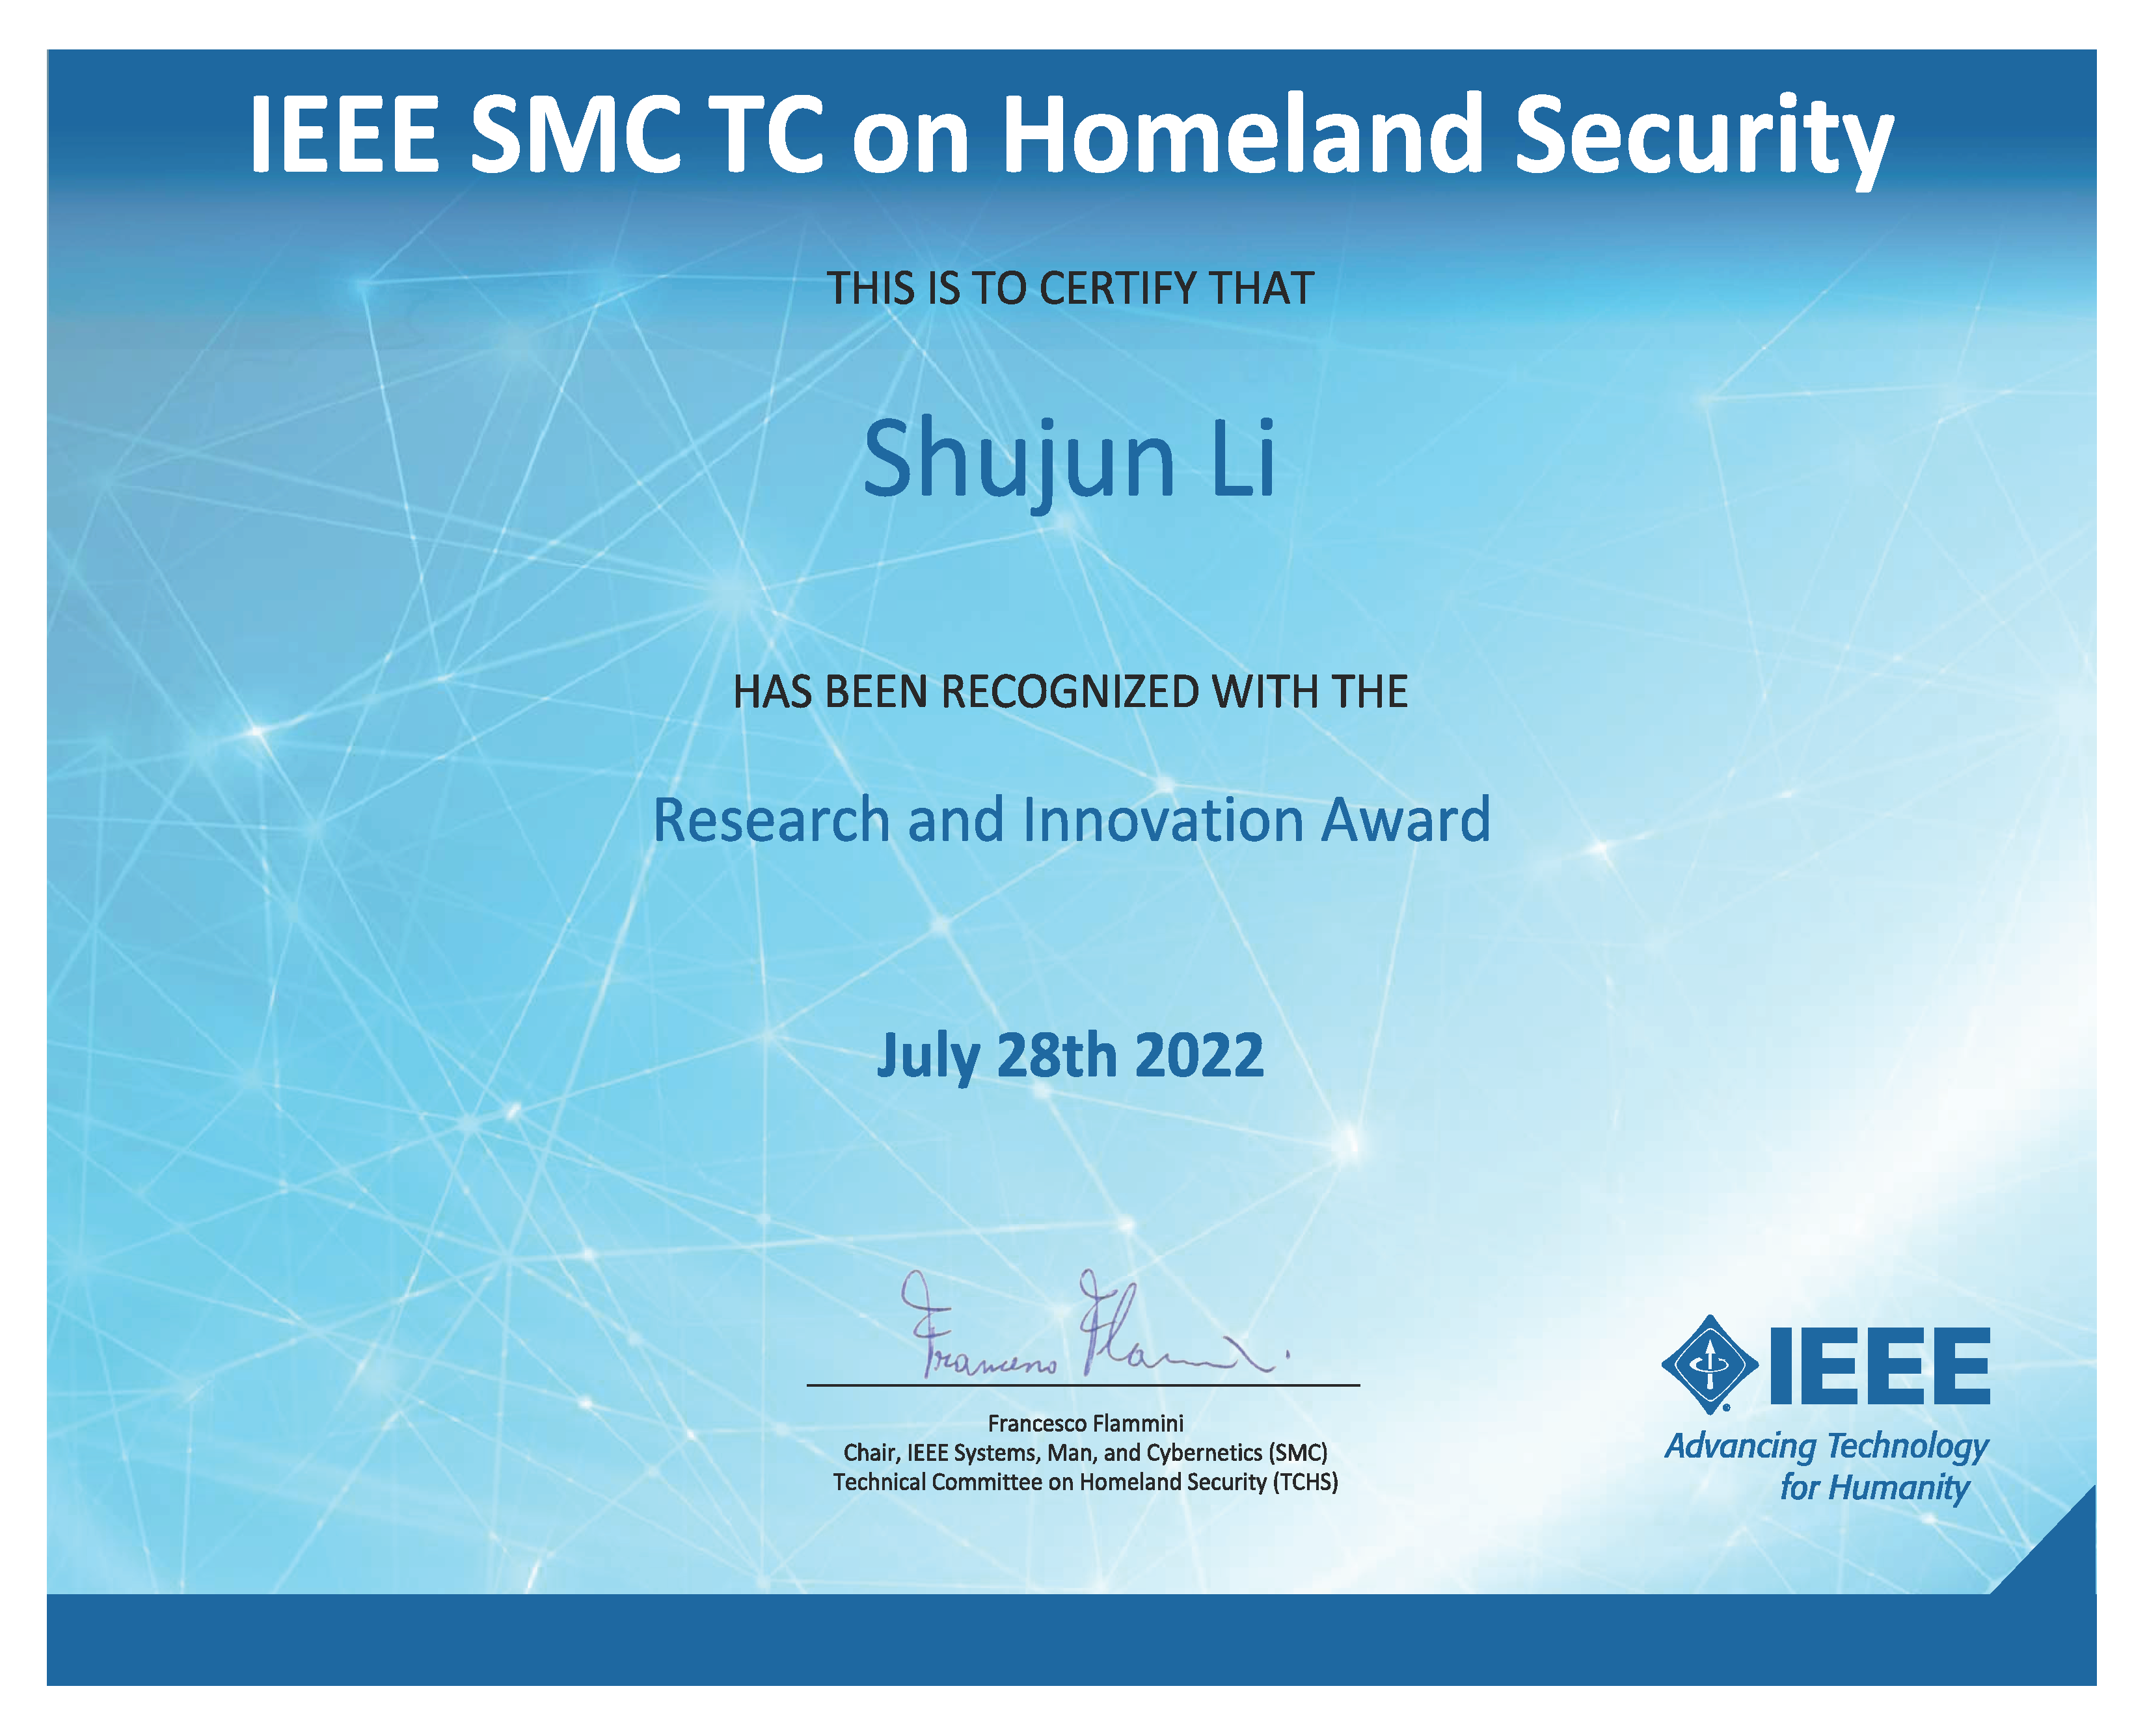 IEEE SMC TC on Homeland Security certificate